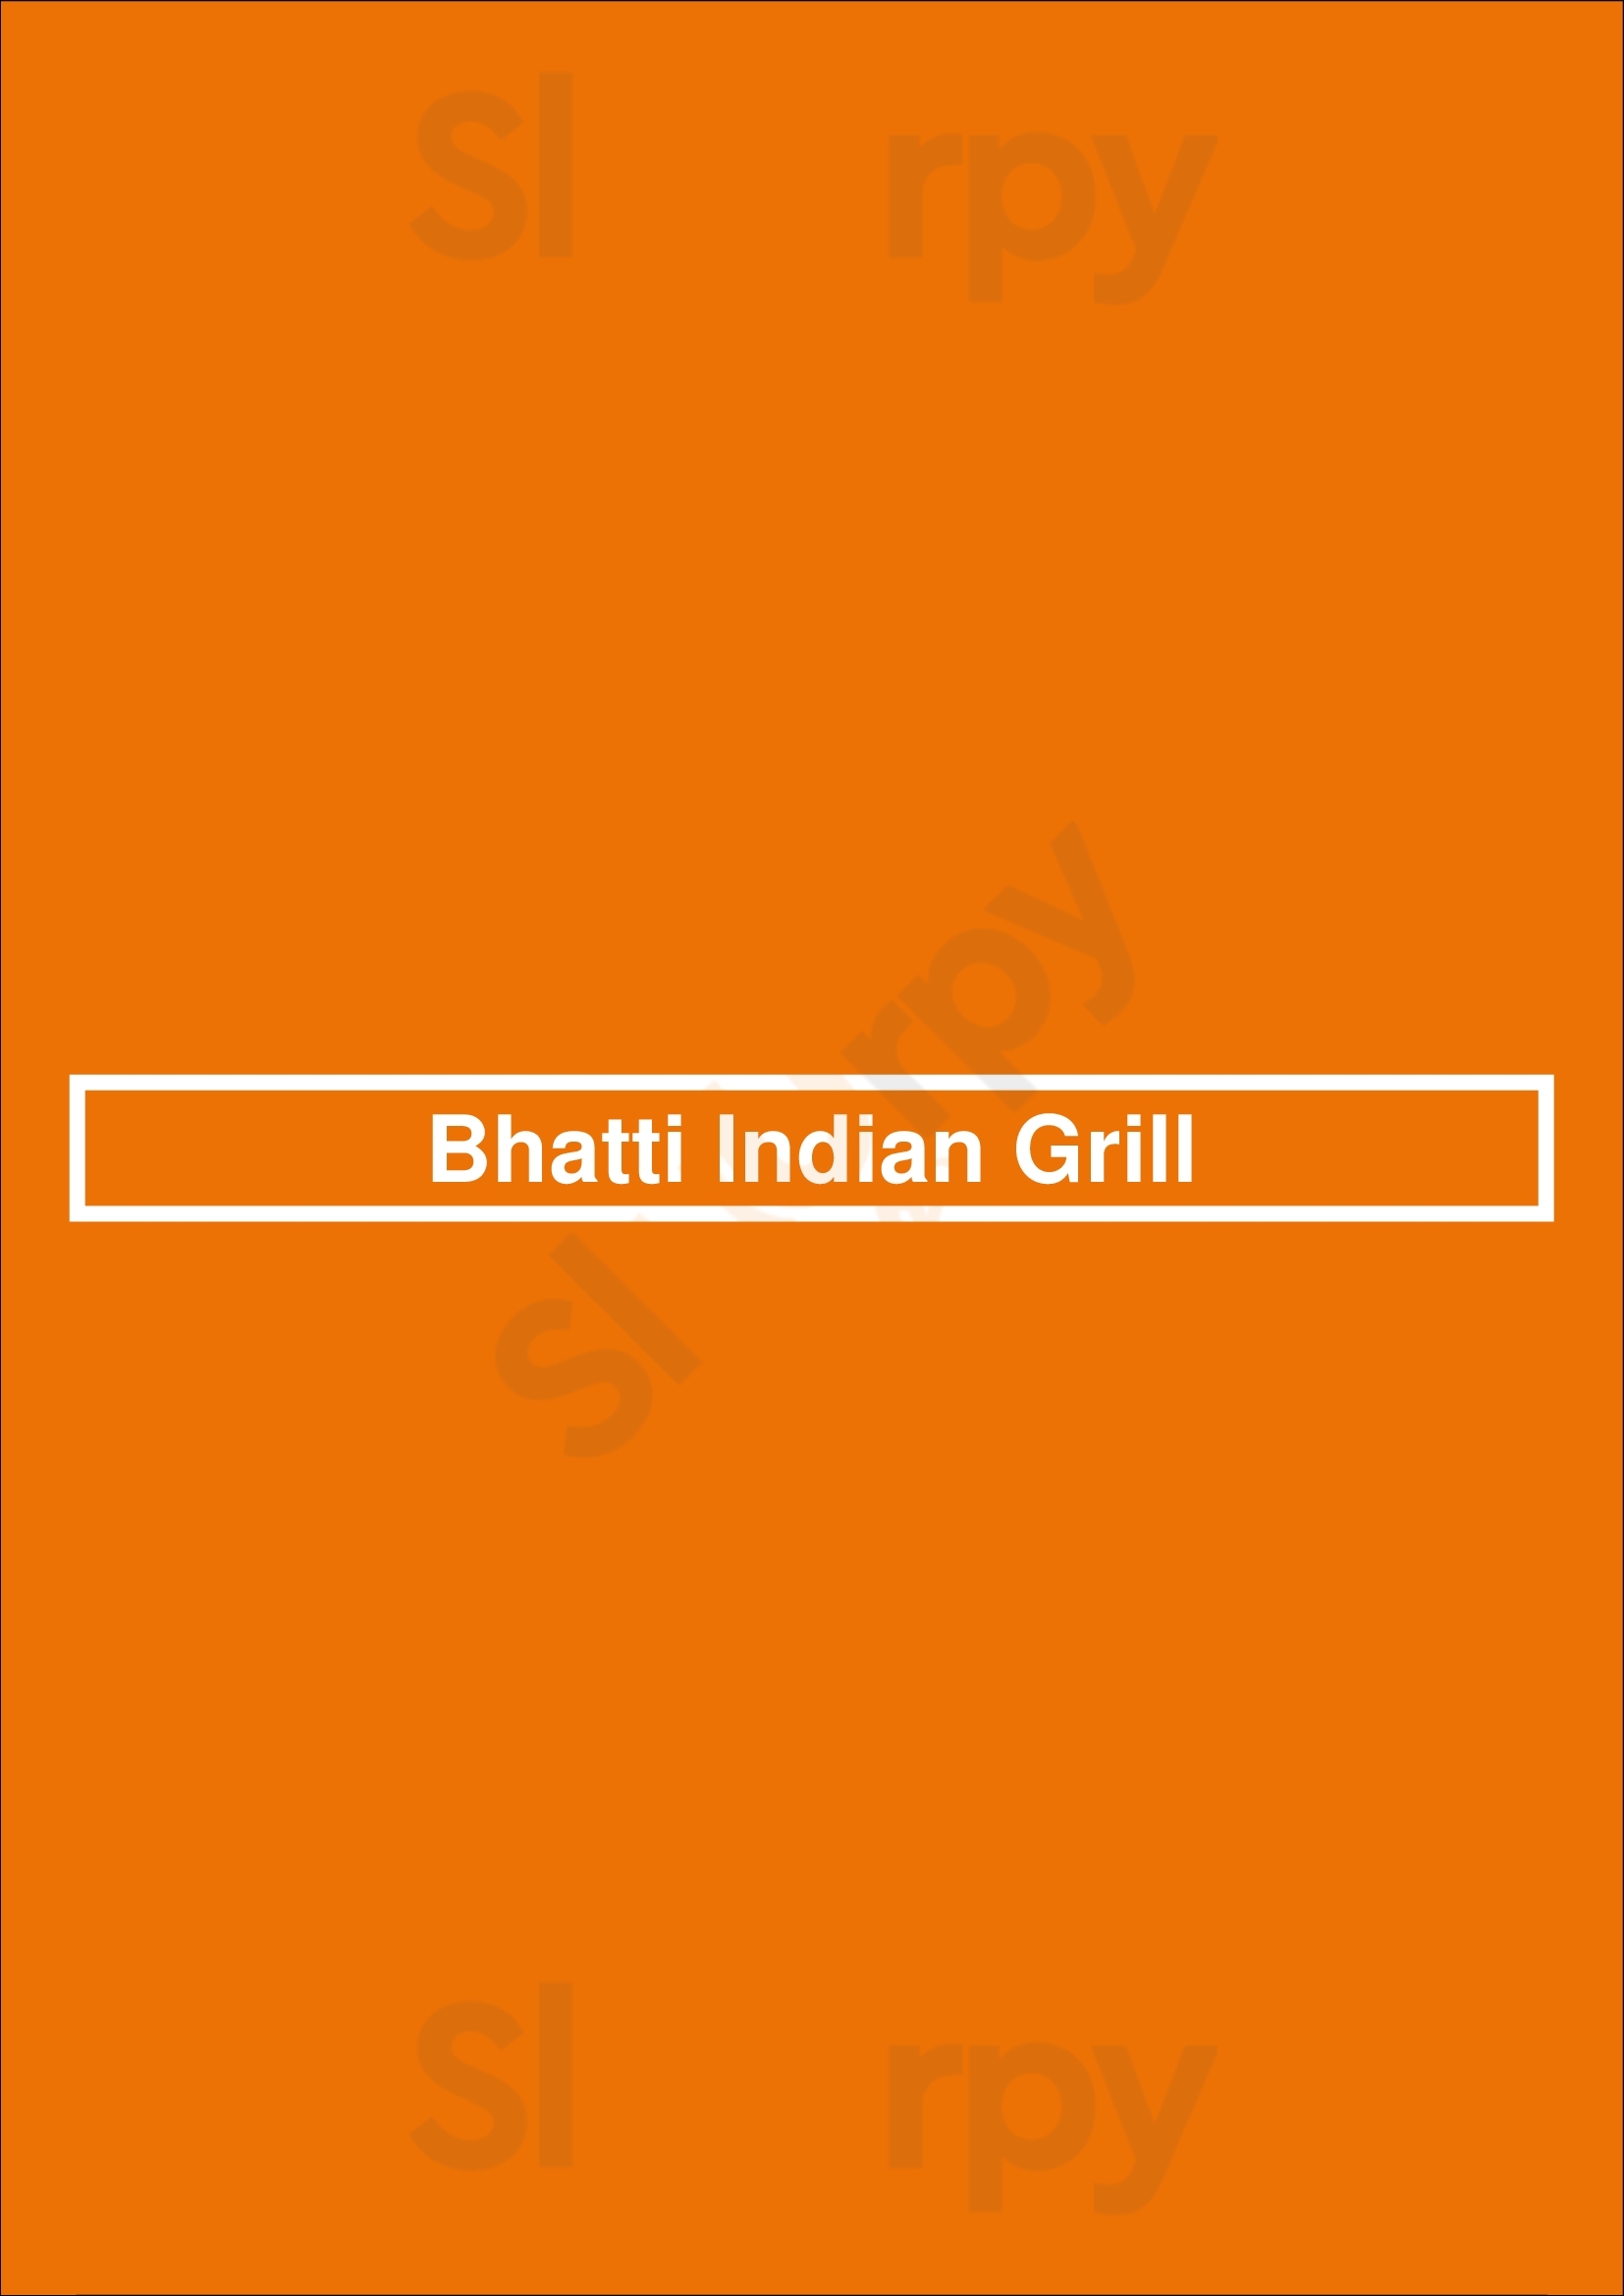 Bhatti Indian Grill New York City Menu - 1